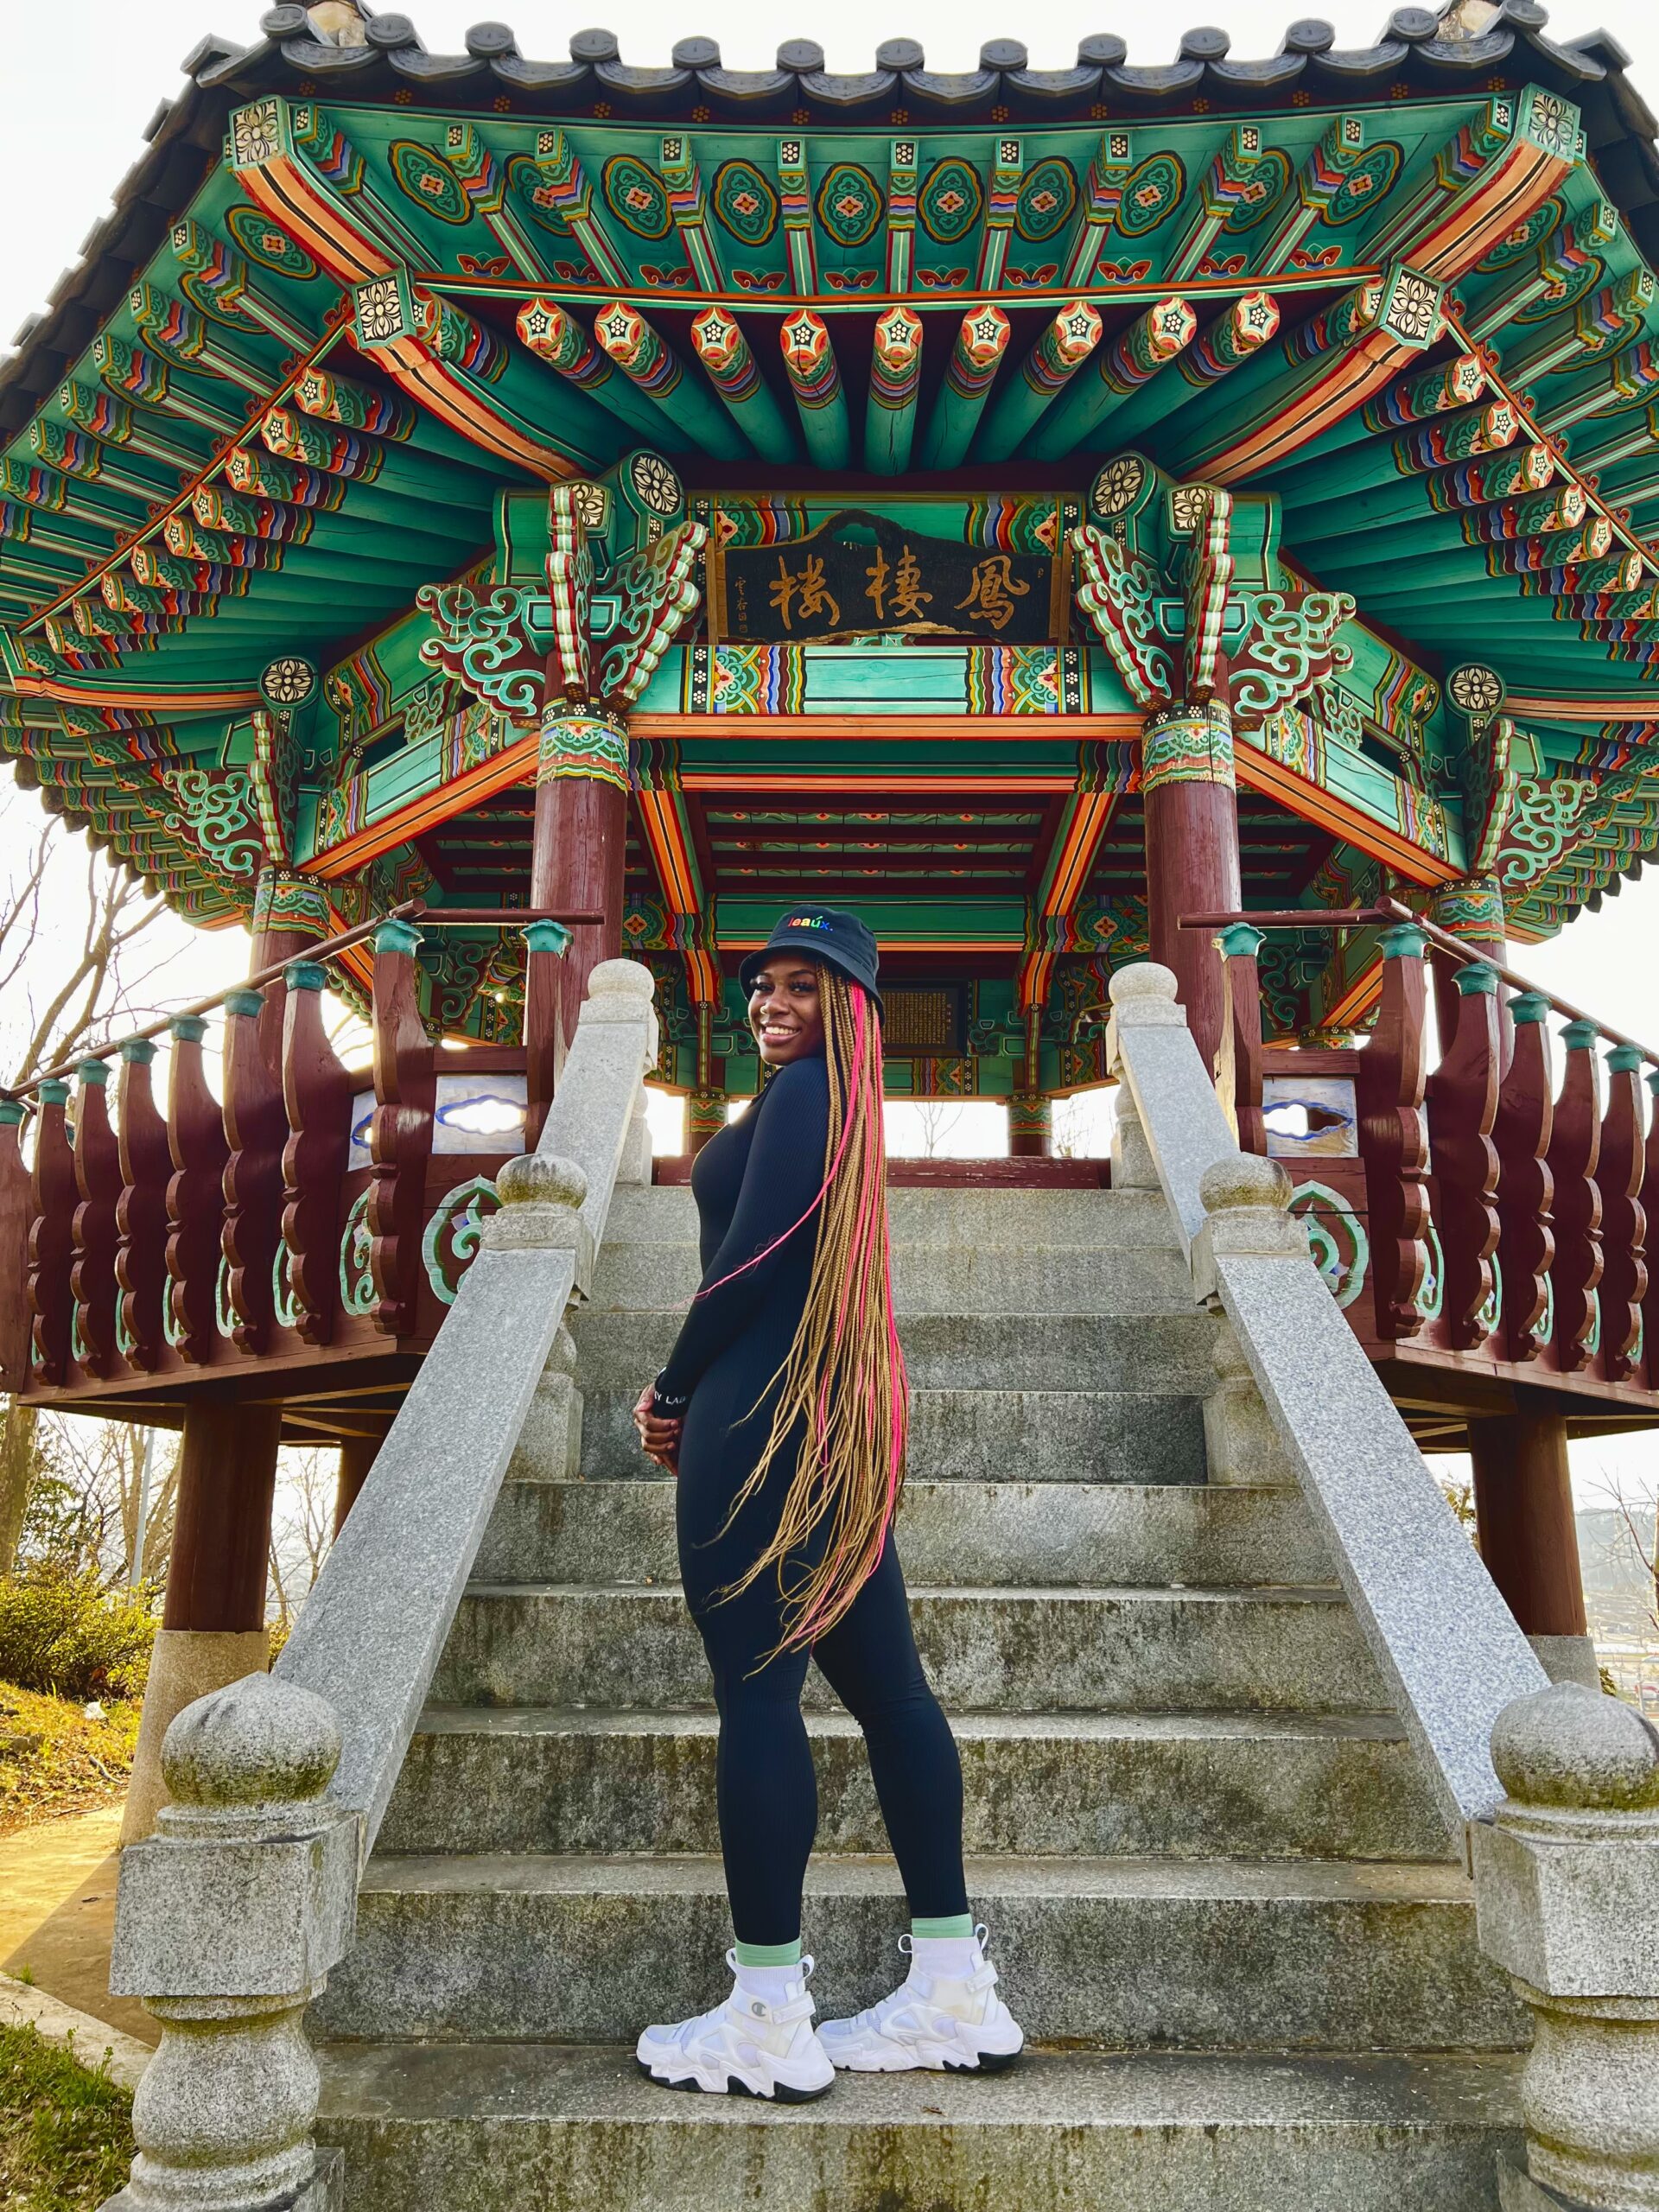 Anjel Iriaghomo standing on the steps of a temple in Gwangju, South Korea